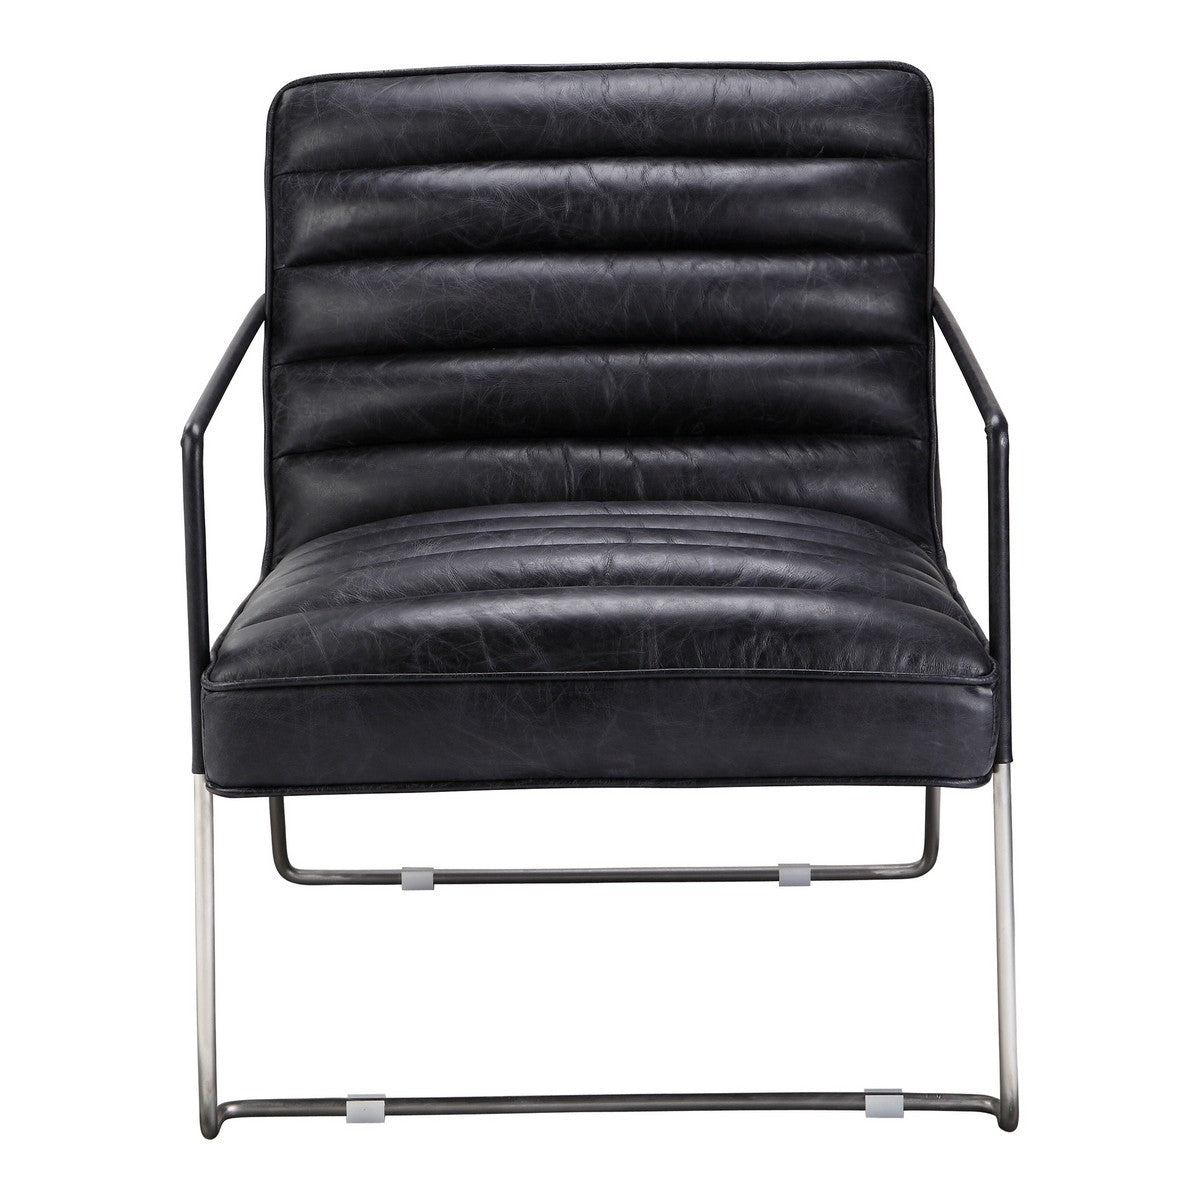 Moe's Home Collection Desmond Club Chair - Black - PK-1045-02